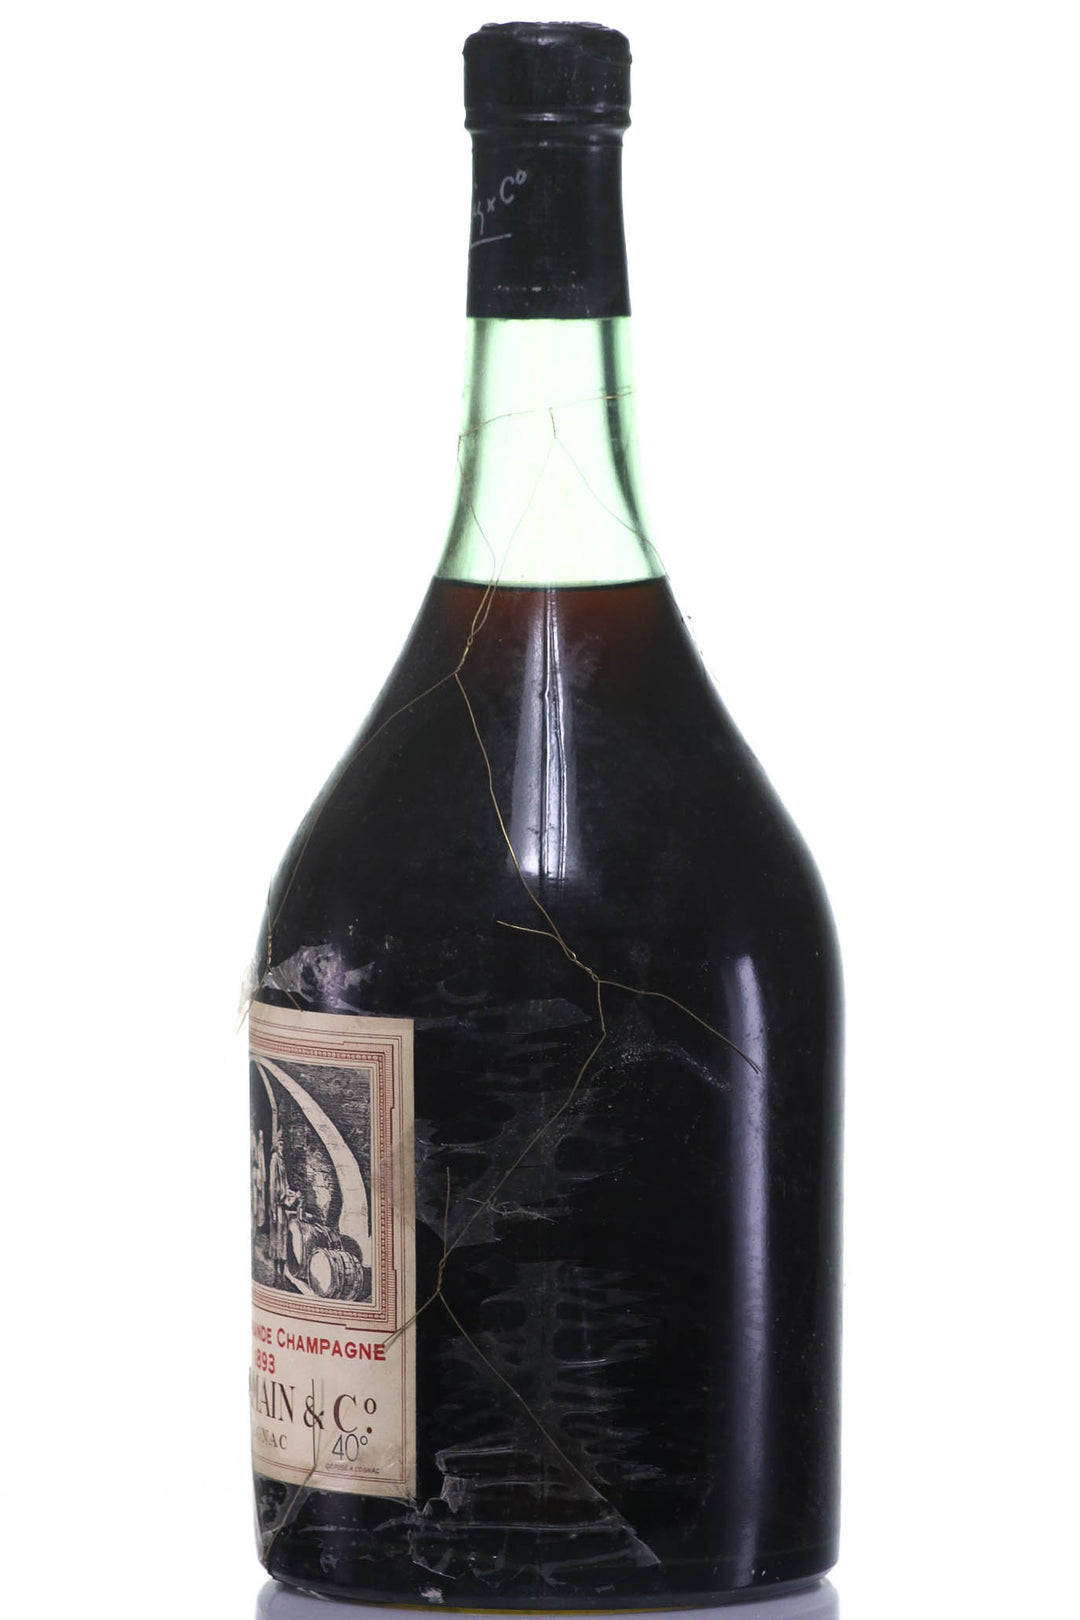 1893 Delamain Vintage Grande Champagne Cognac - legendaryvintages